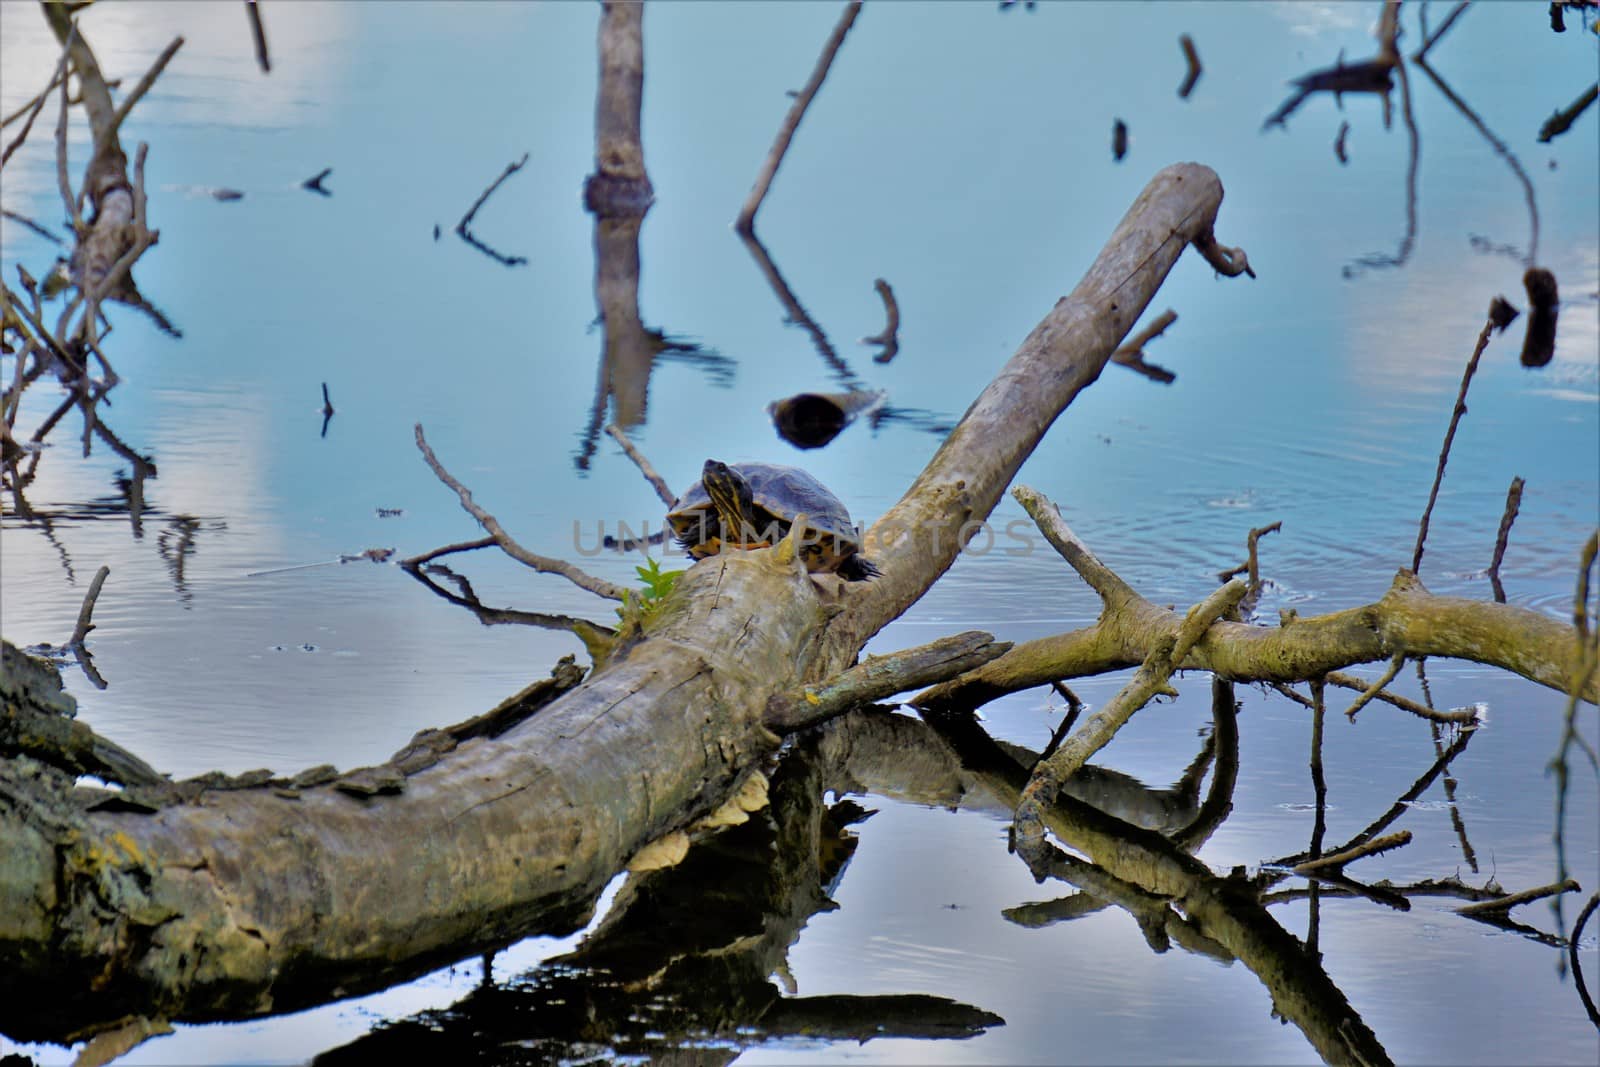 A Turtle sitting on a dead tree in blue lake